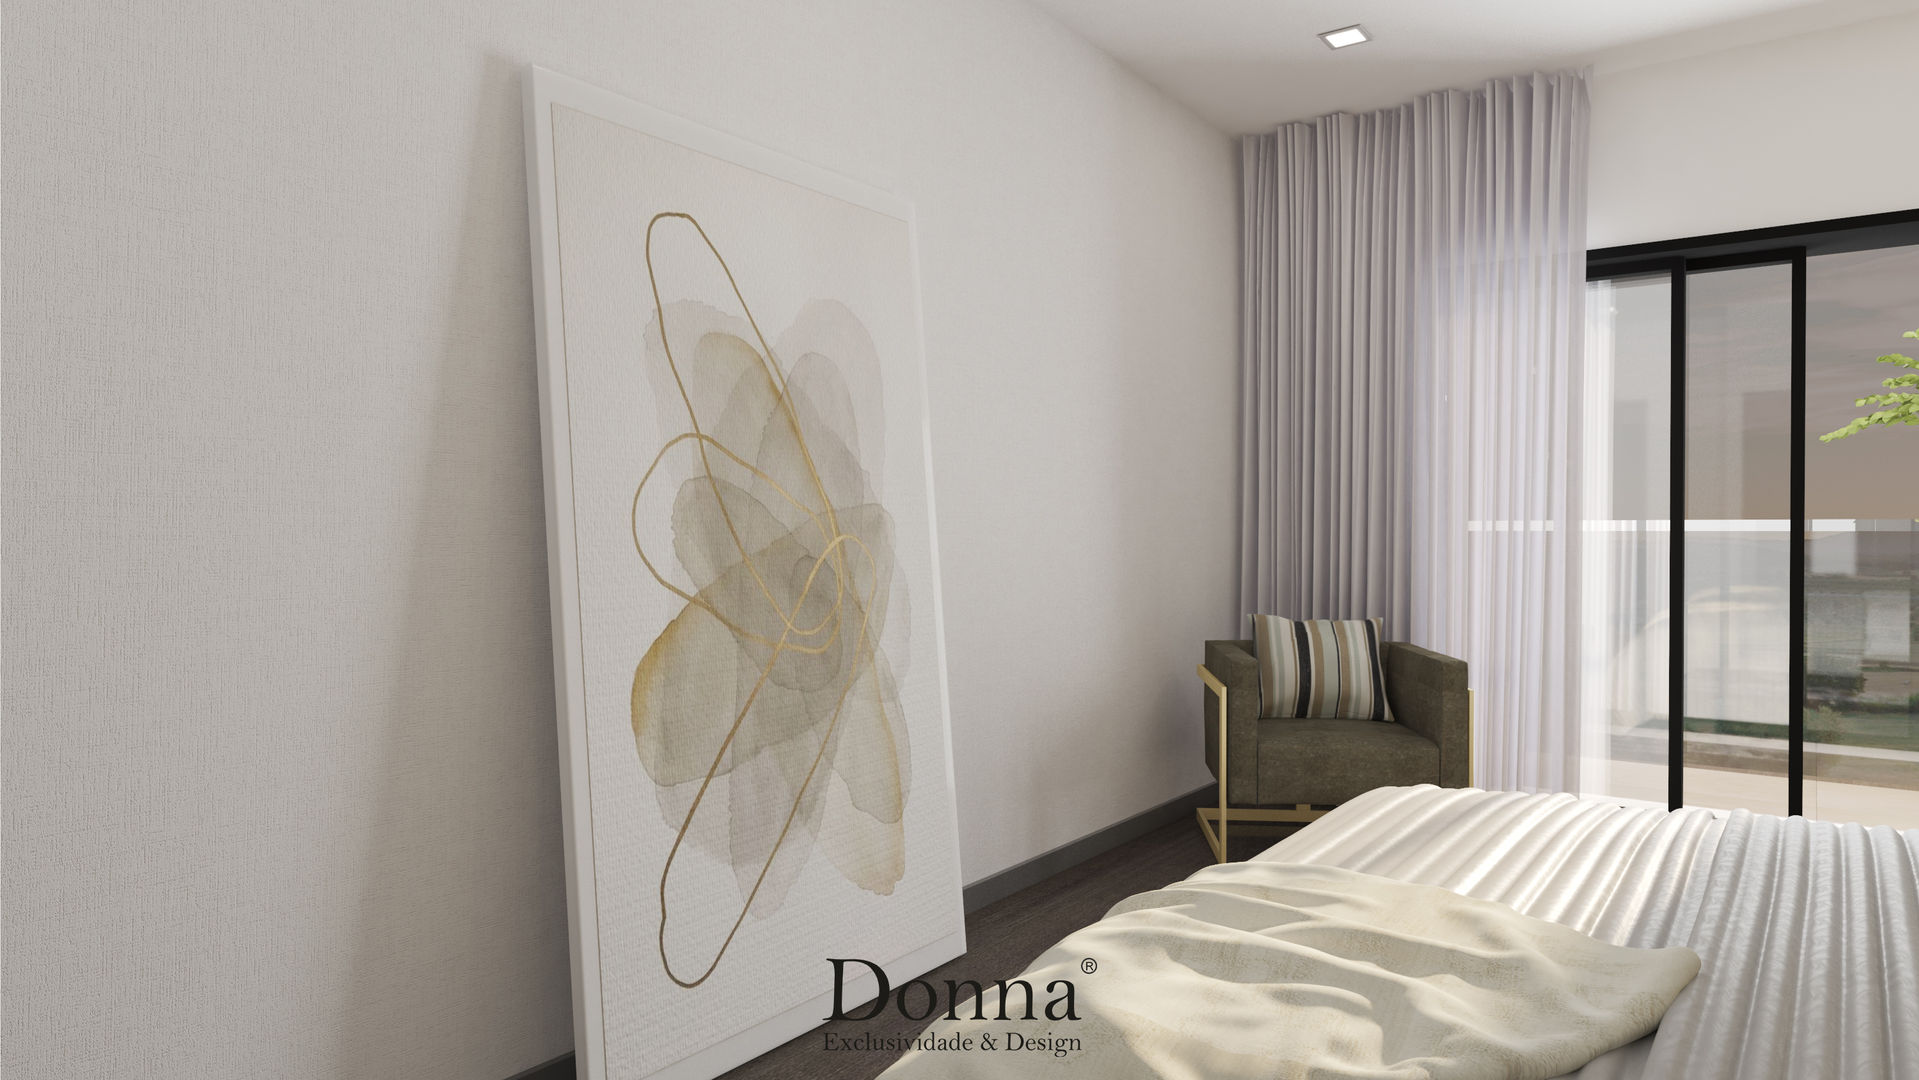 Projeto de Interiores 3D em Apartamento no Montijo , Donna - Exclusividade e Design Donna - Exclusividade e Design Cuartos de estilo moderno